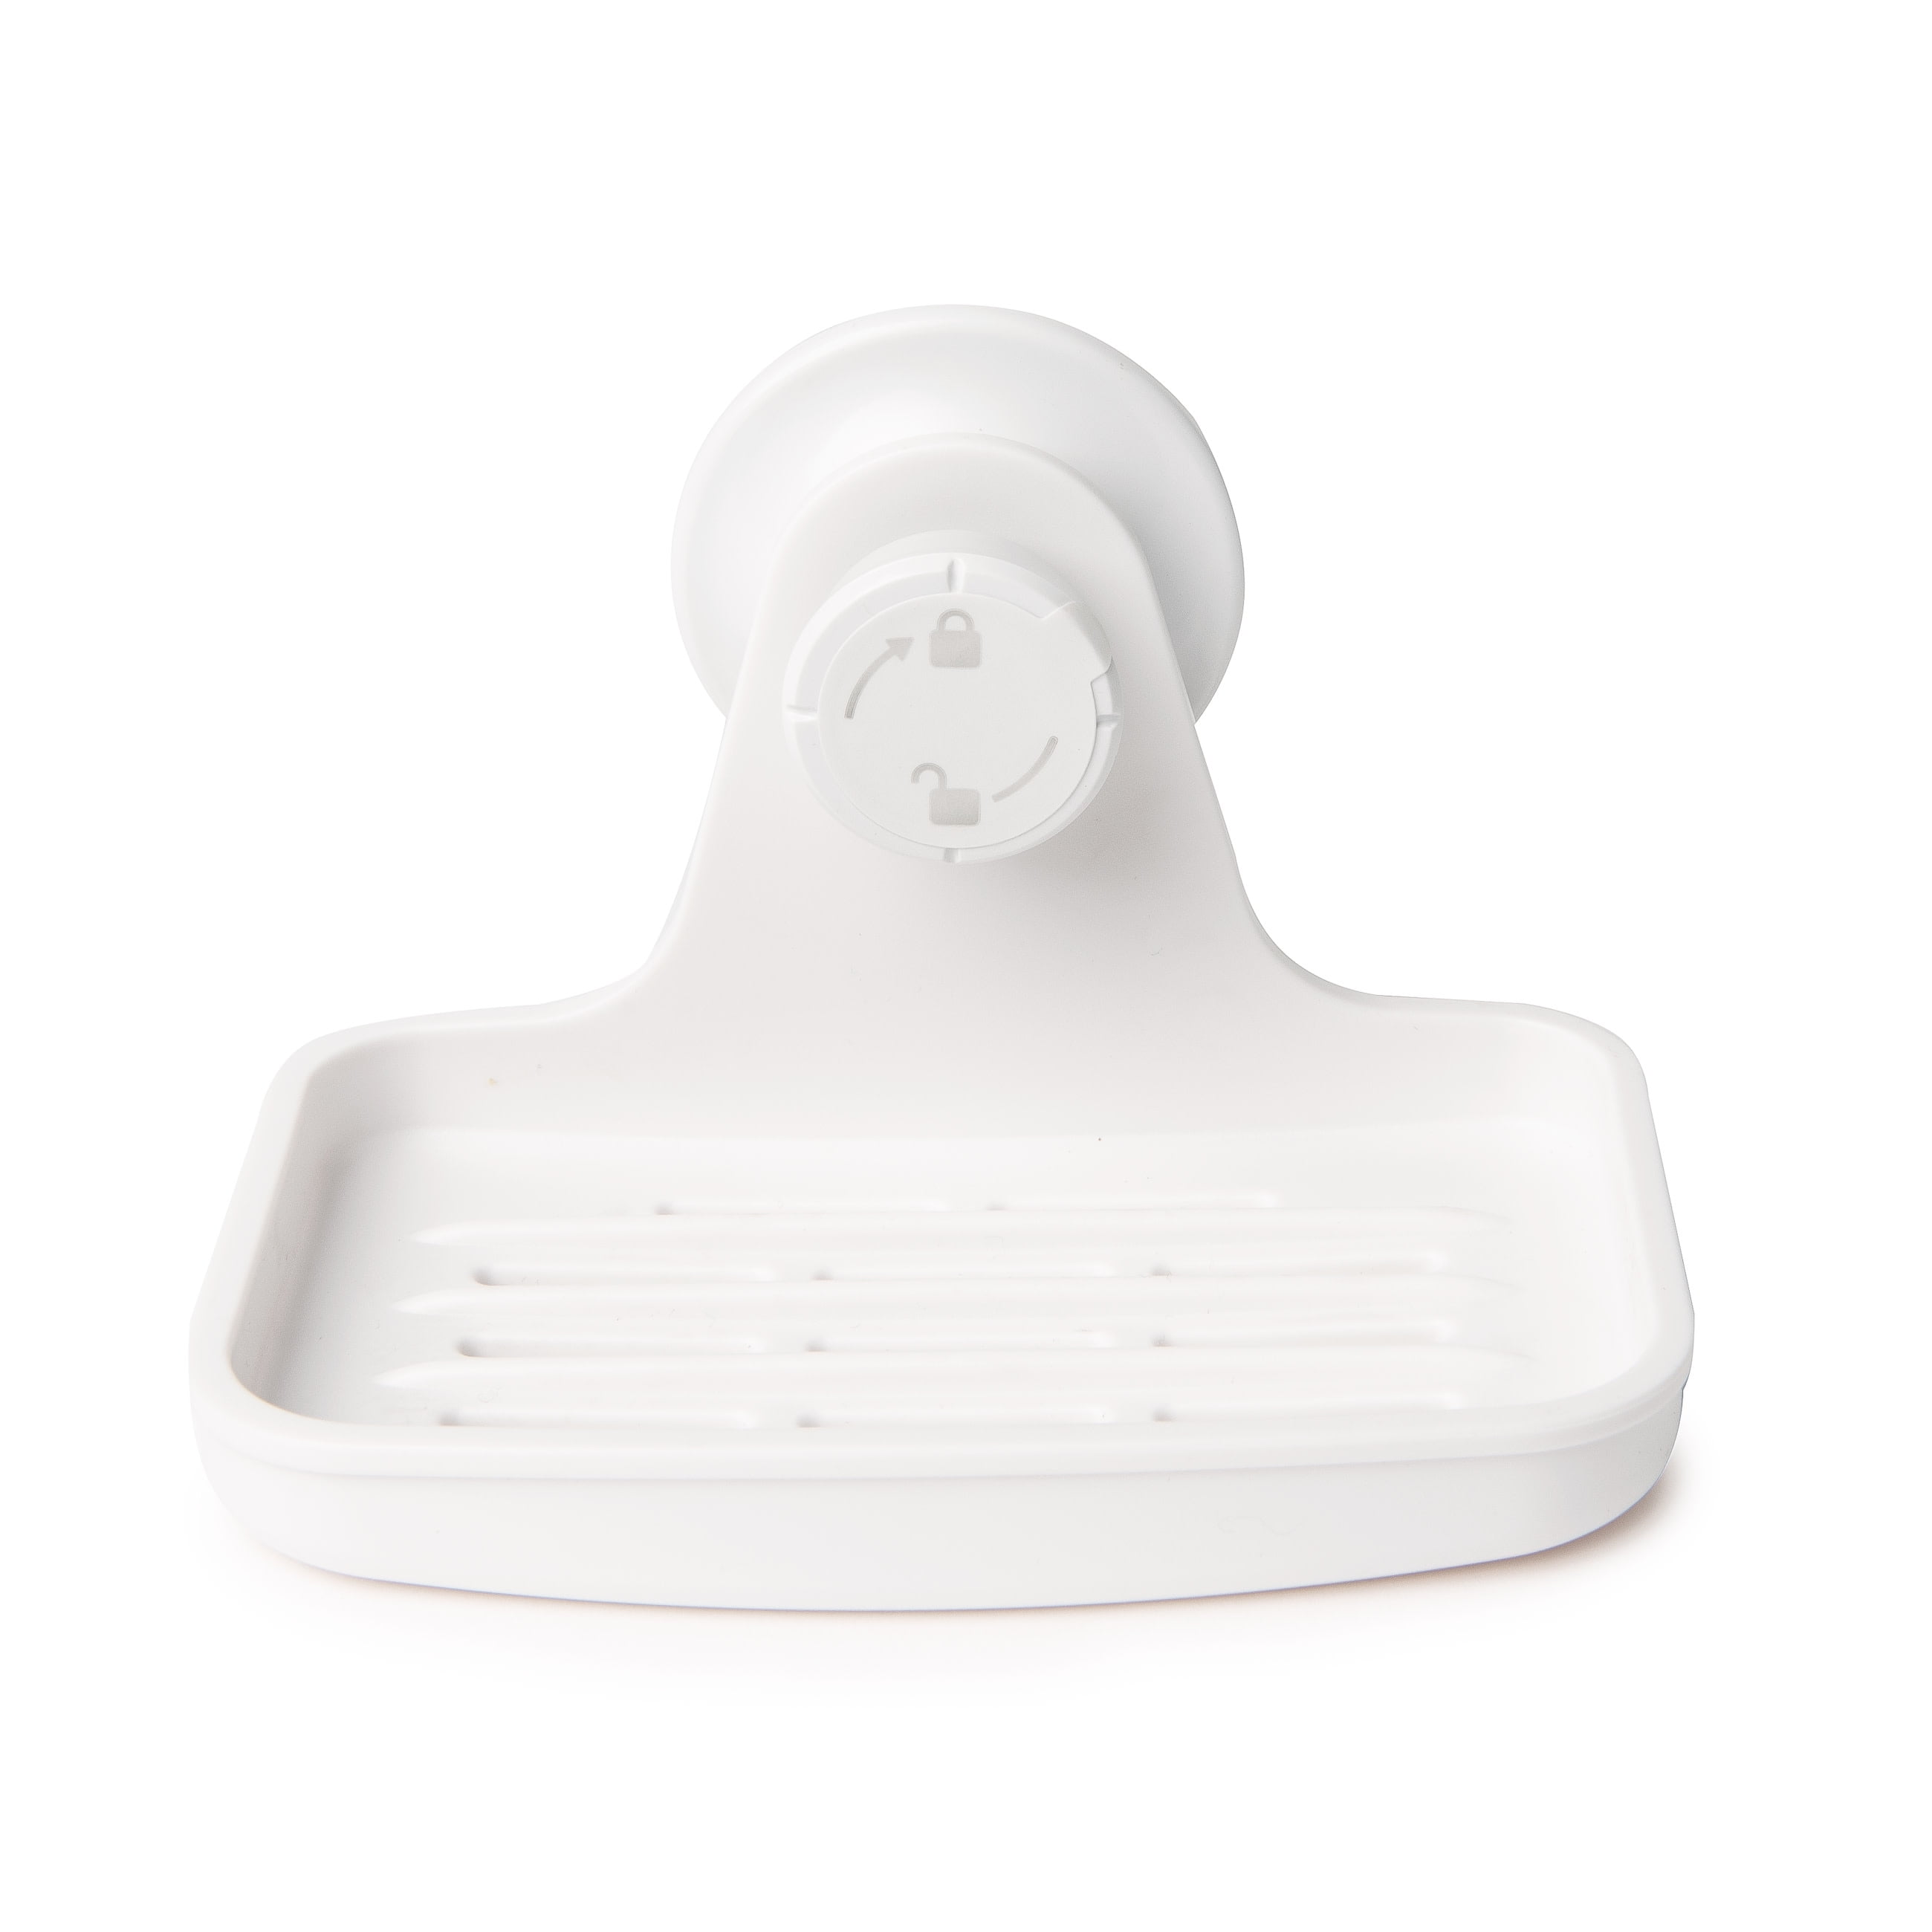 Umbra Flex Shower Bins Set of 3 White 1018927-660 - The Home Depot